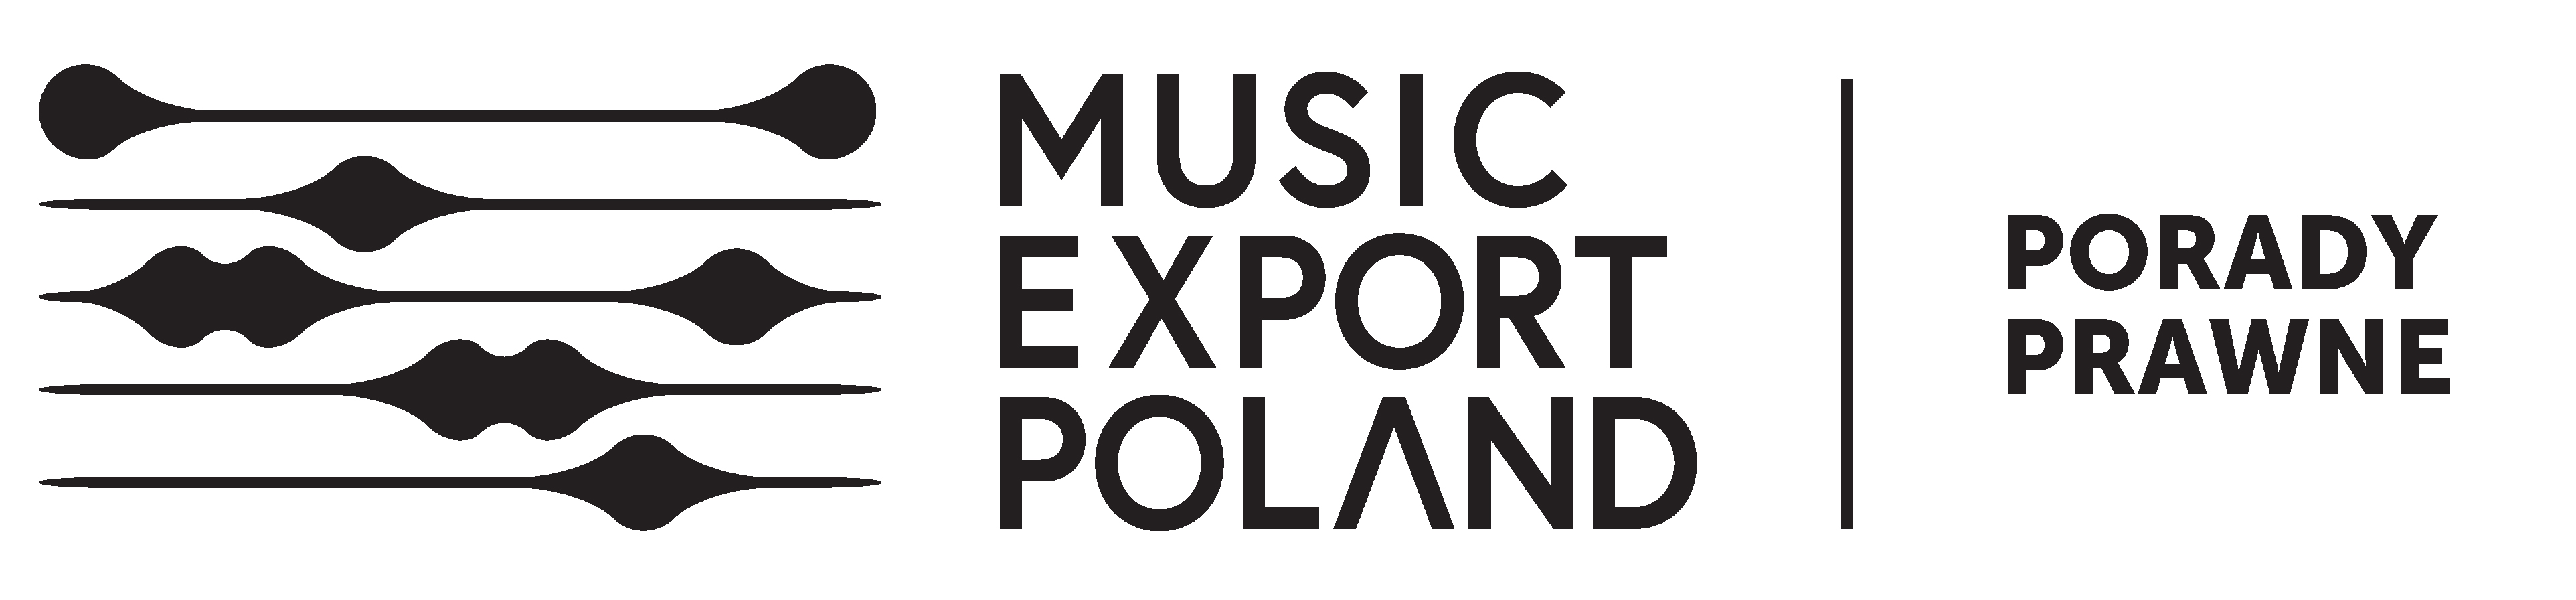 Music export porady prawne - logo